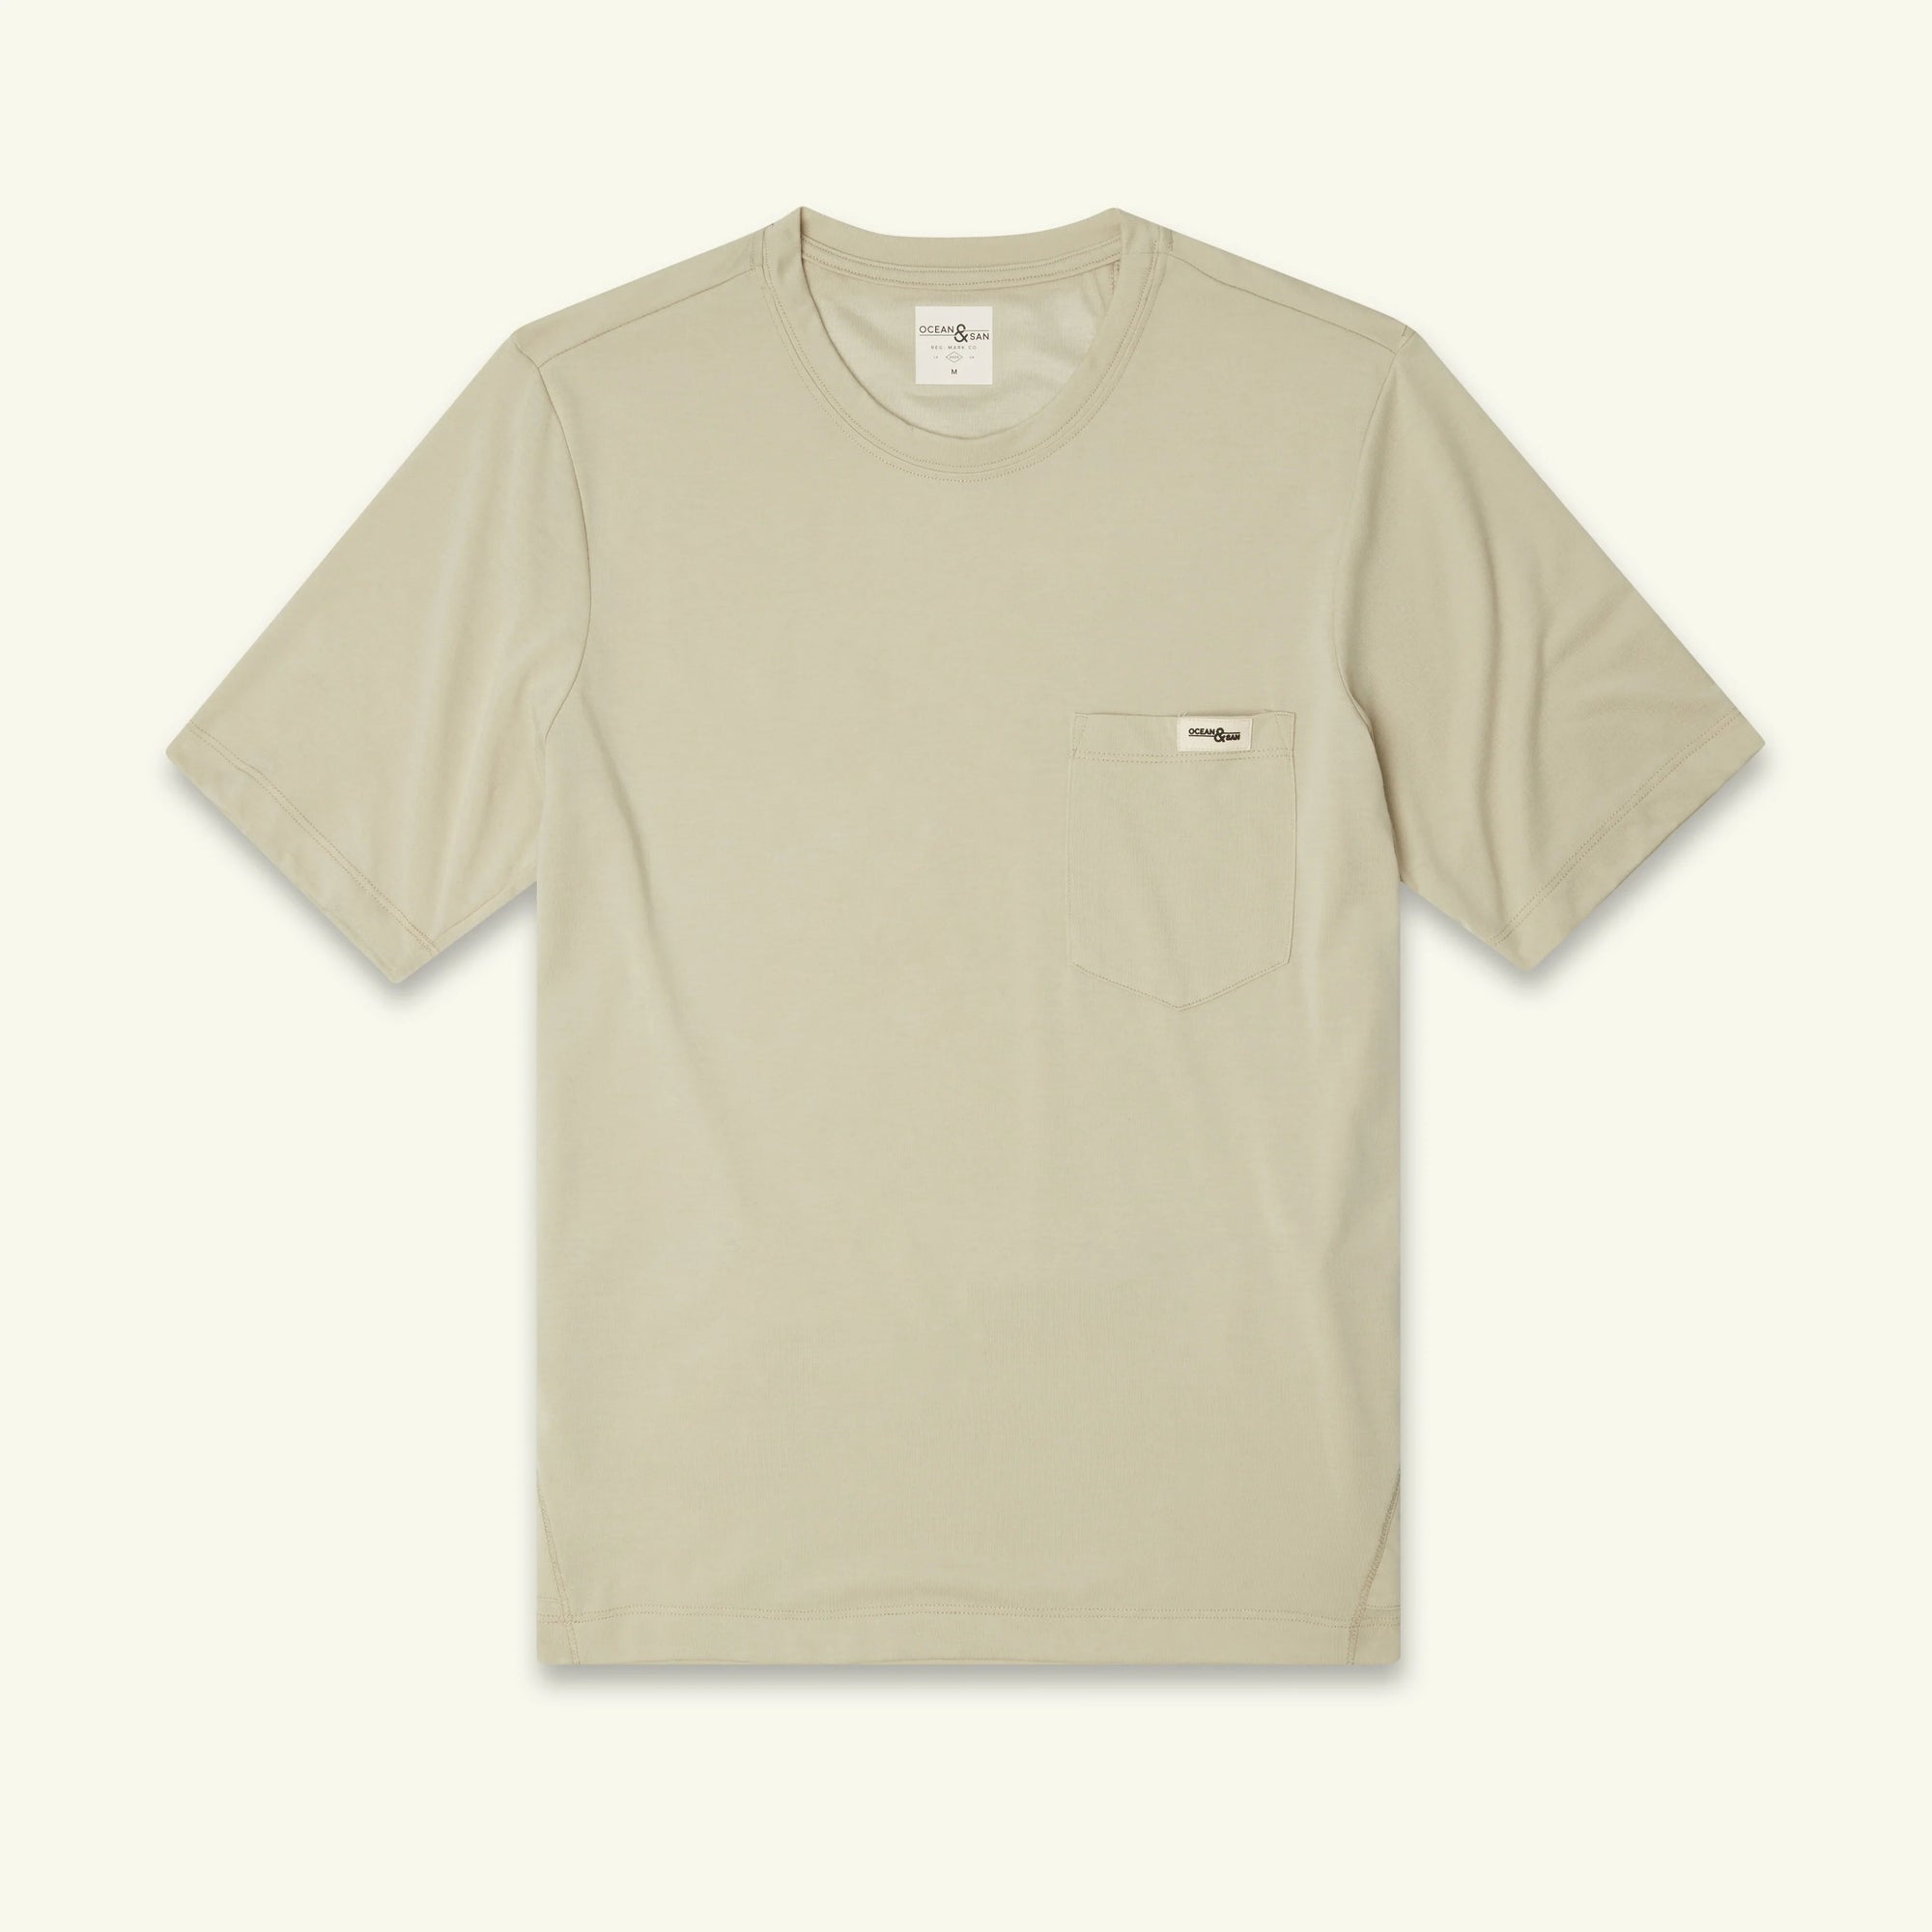 All Day Shirt - Summer Edition ユニセックス サイクルシャツ | GEARED